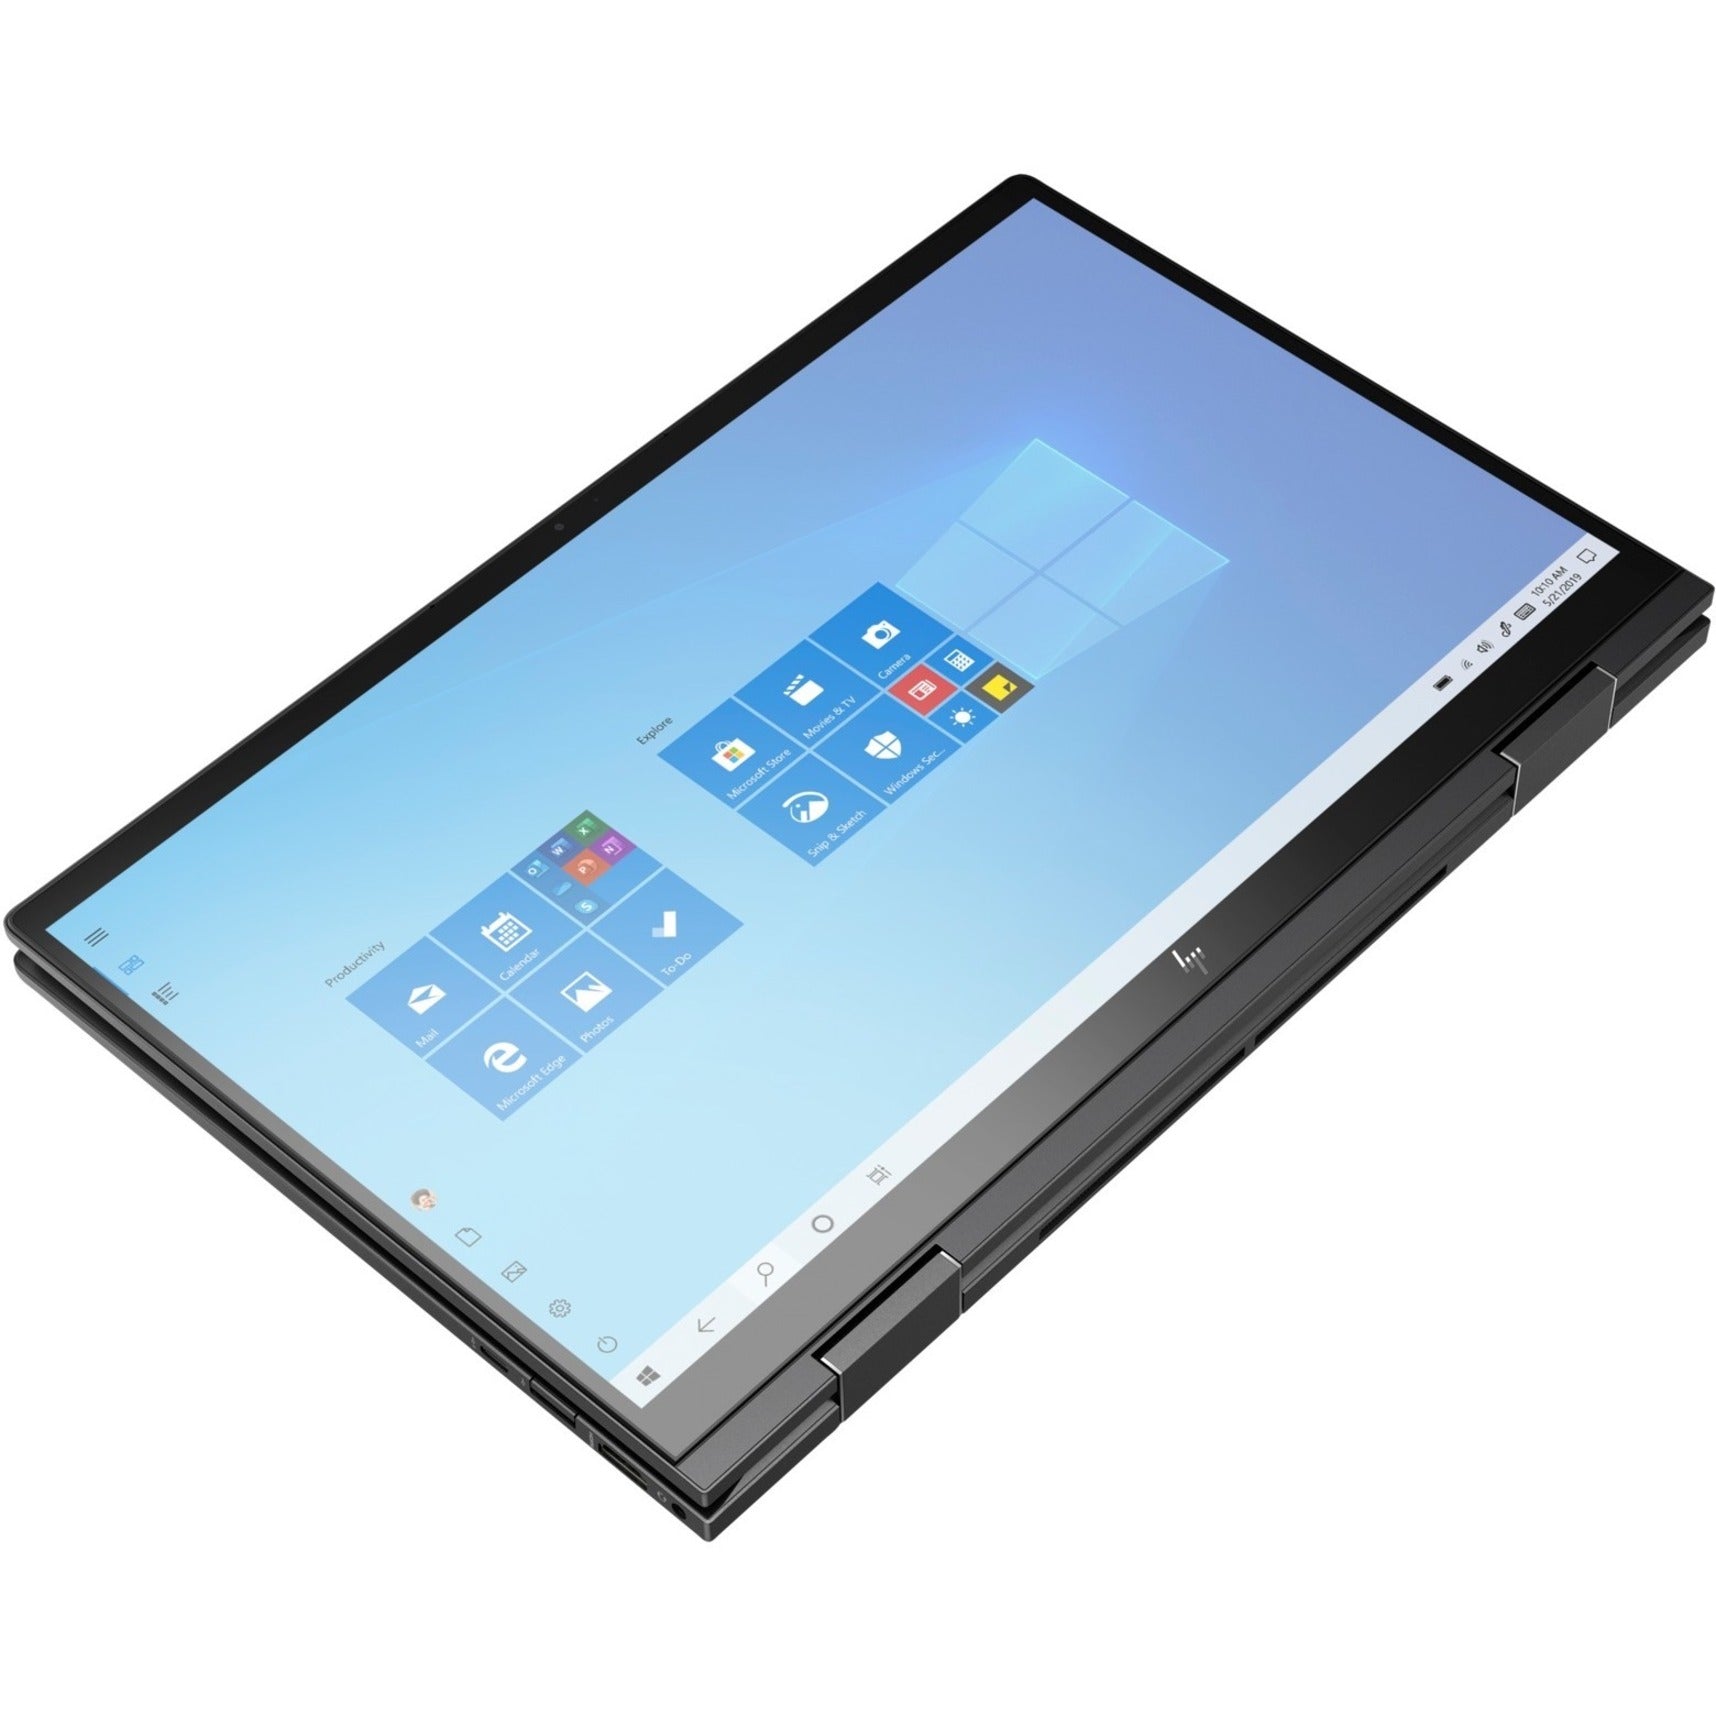 HP ENVY x360 15-ee1083cl 15.6" Touchscreen Convertible 2 in 1 Notebook, Full HD, Ryzen 7, 12GB RAM, 512GB SSD, Nightfall Black Aluminum, Refurbished